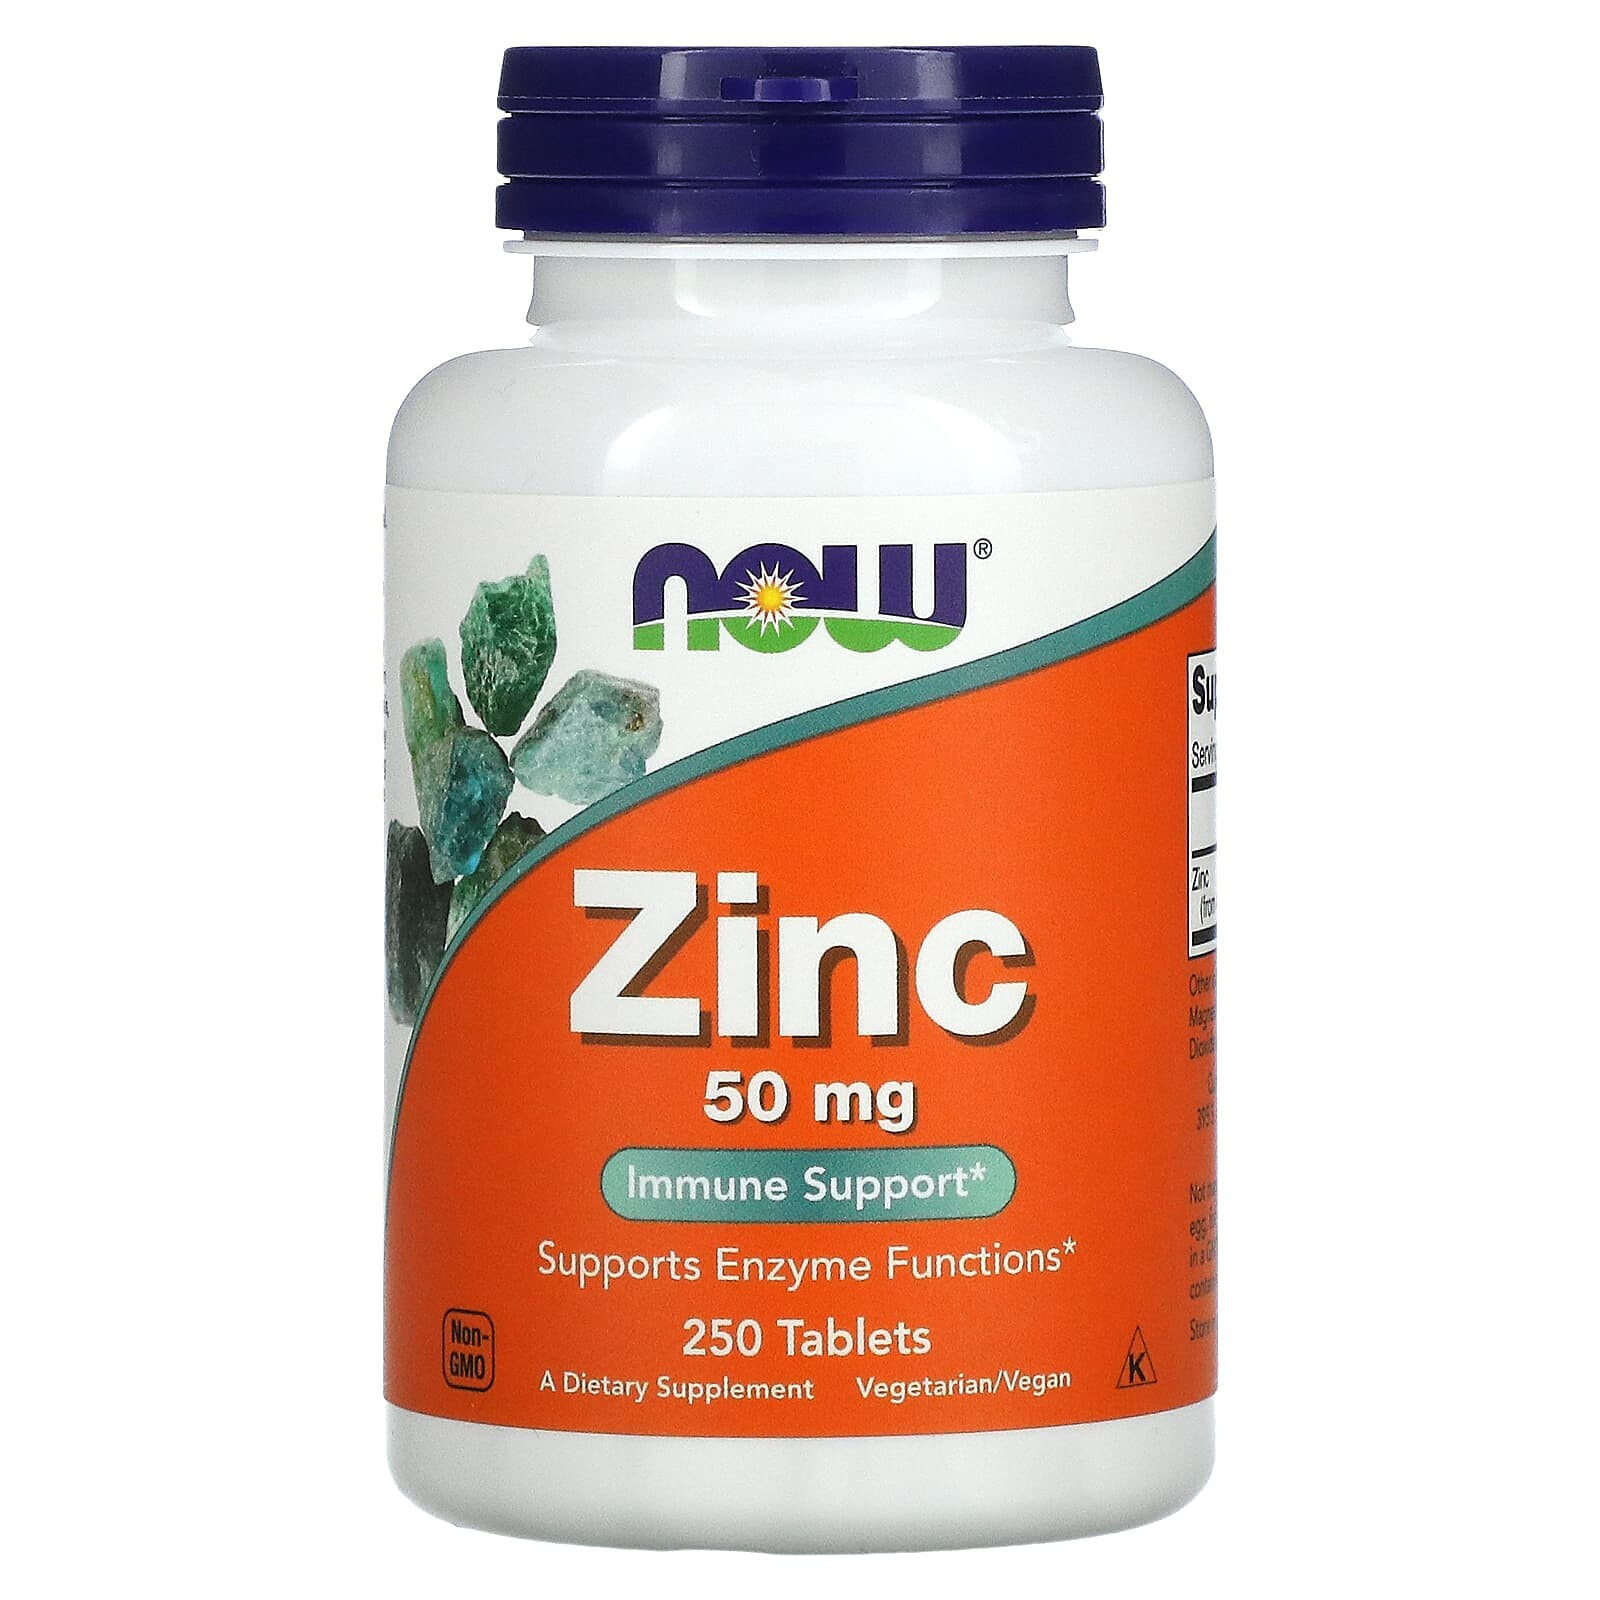 NOW Zinc Цинк  50 мг  100 Вегетарианских таблеток